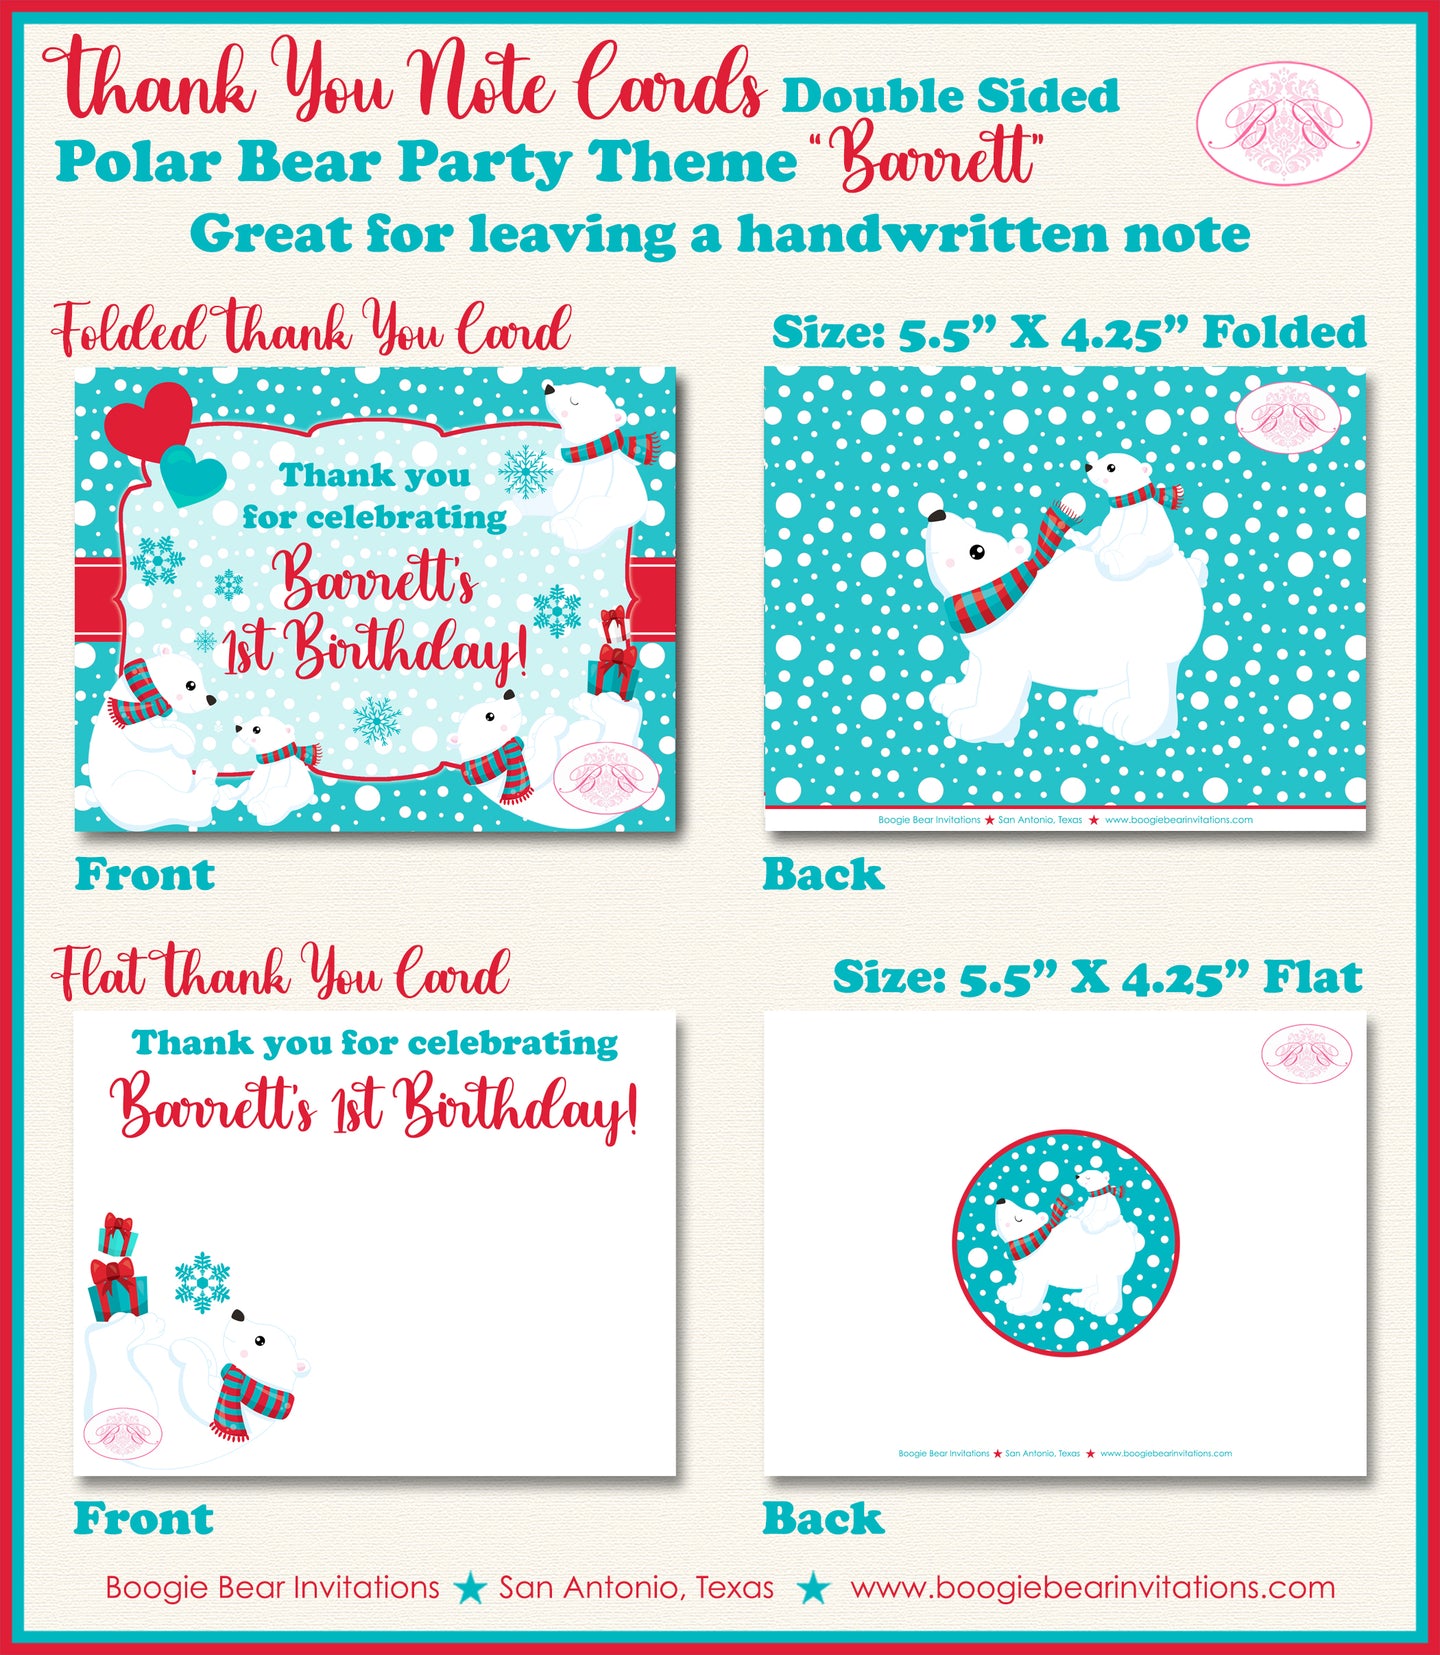 Polar Bear Party Thank You Cards Birthday Winter Christmas Boogie Bear Invitations Barrett Theme Printed